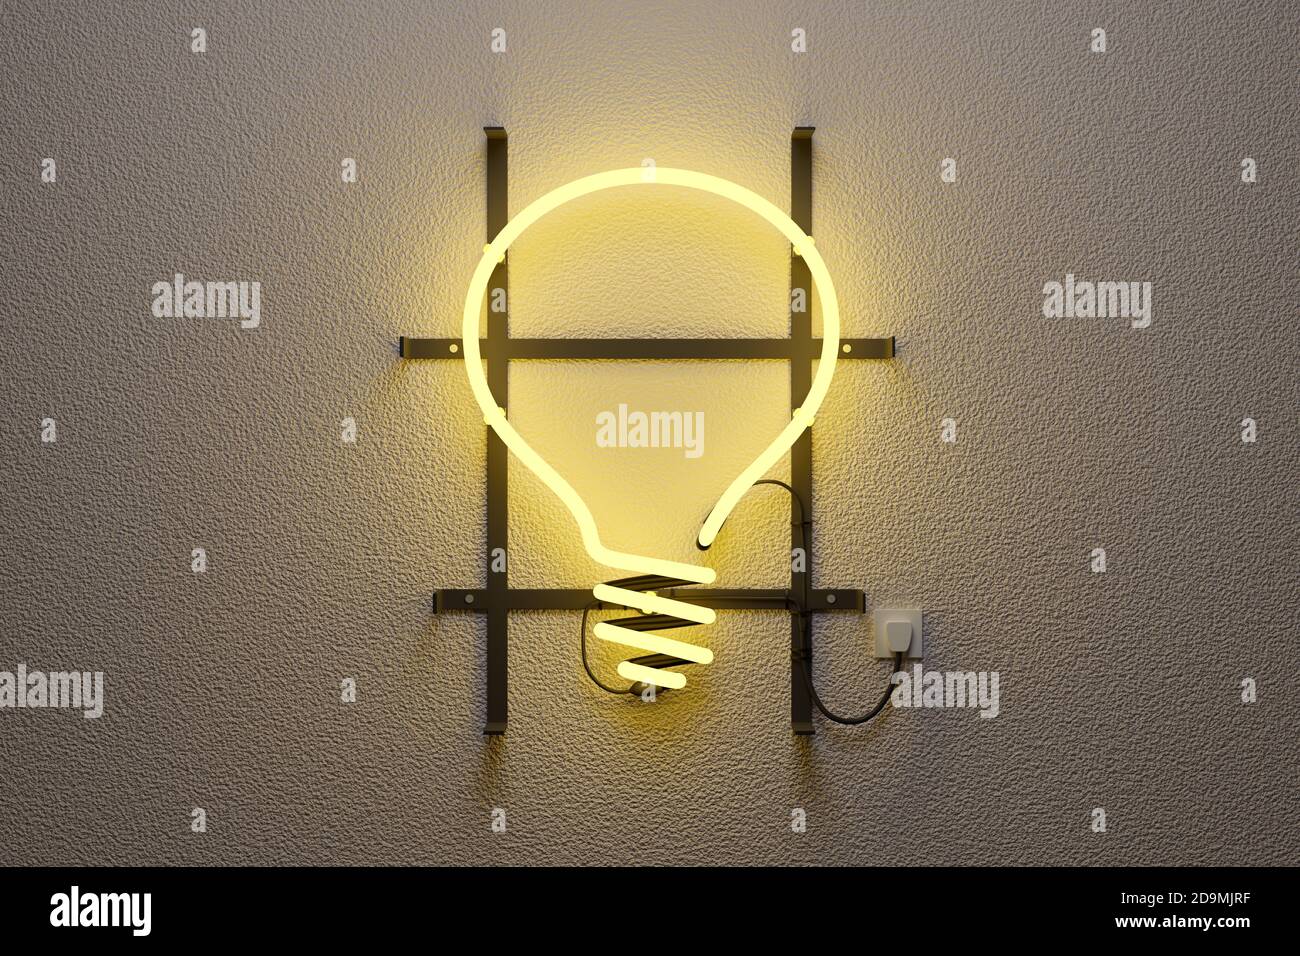 Realistic 3d illustration of yellow neon light with light bulb shape. Idea concept. 3d illustration. Stock Photo